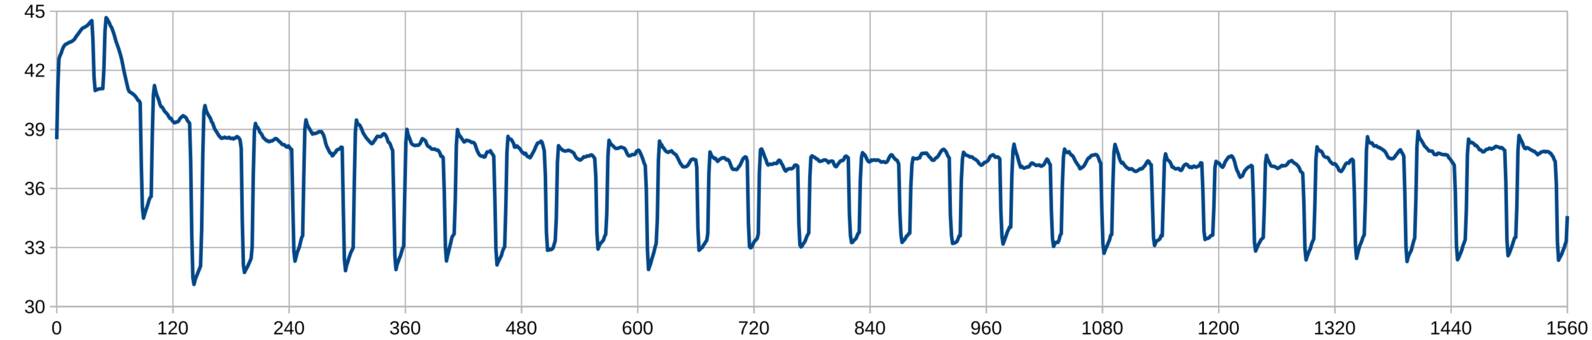 Plot of power versus time during 30 Cinebench R15 runs